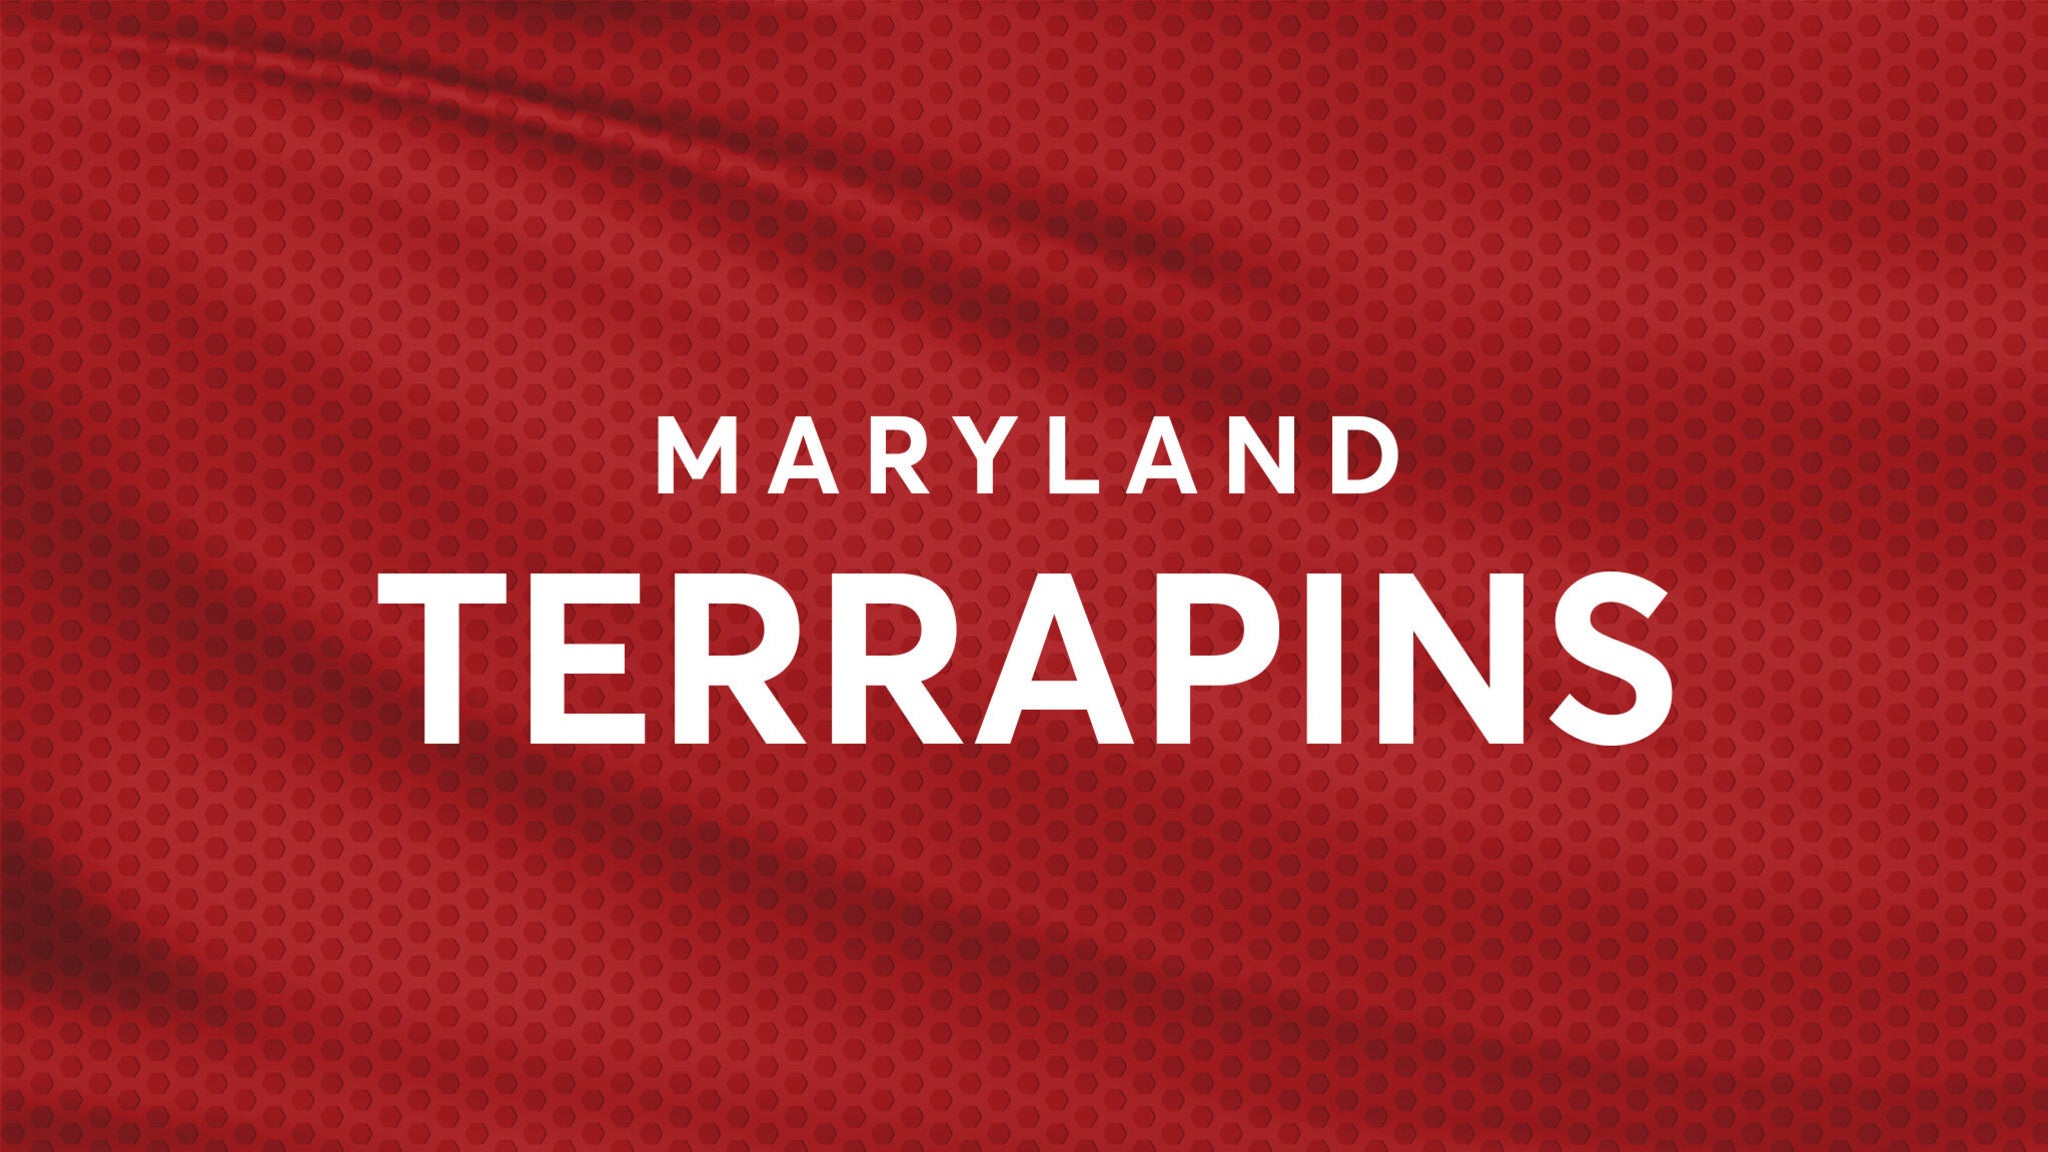 Maryland Terrapins Football vs. Ohio State Football